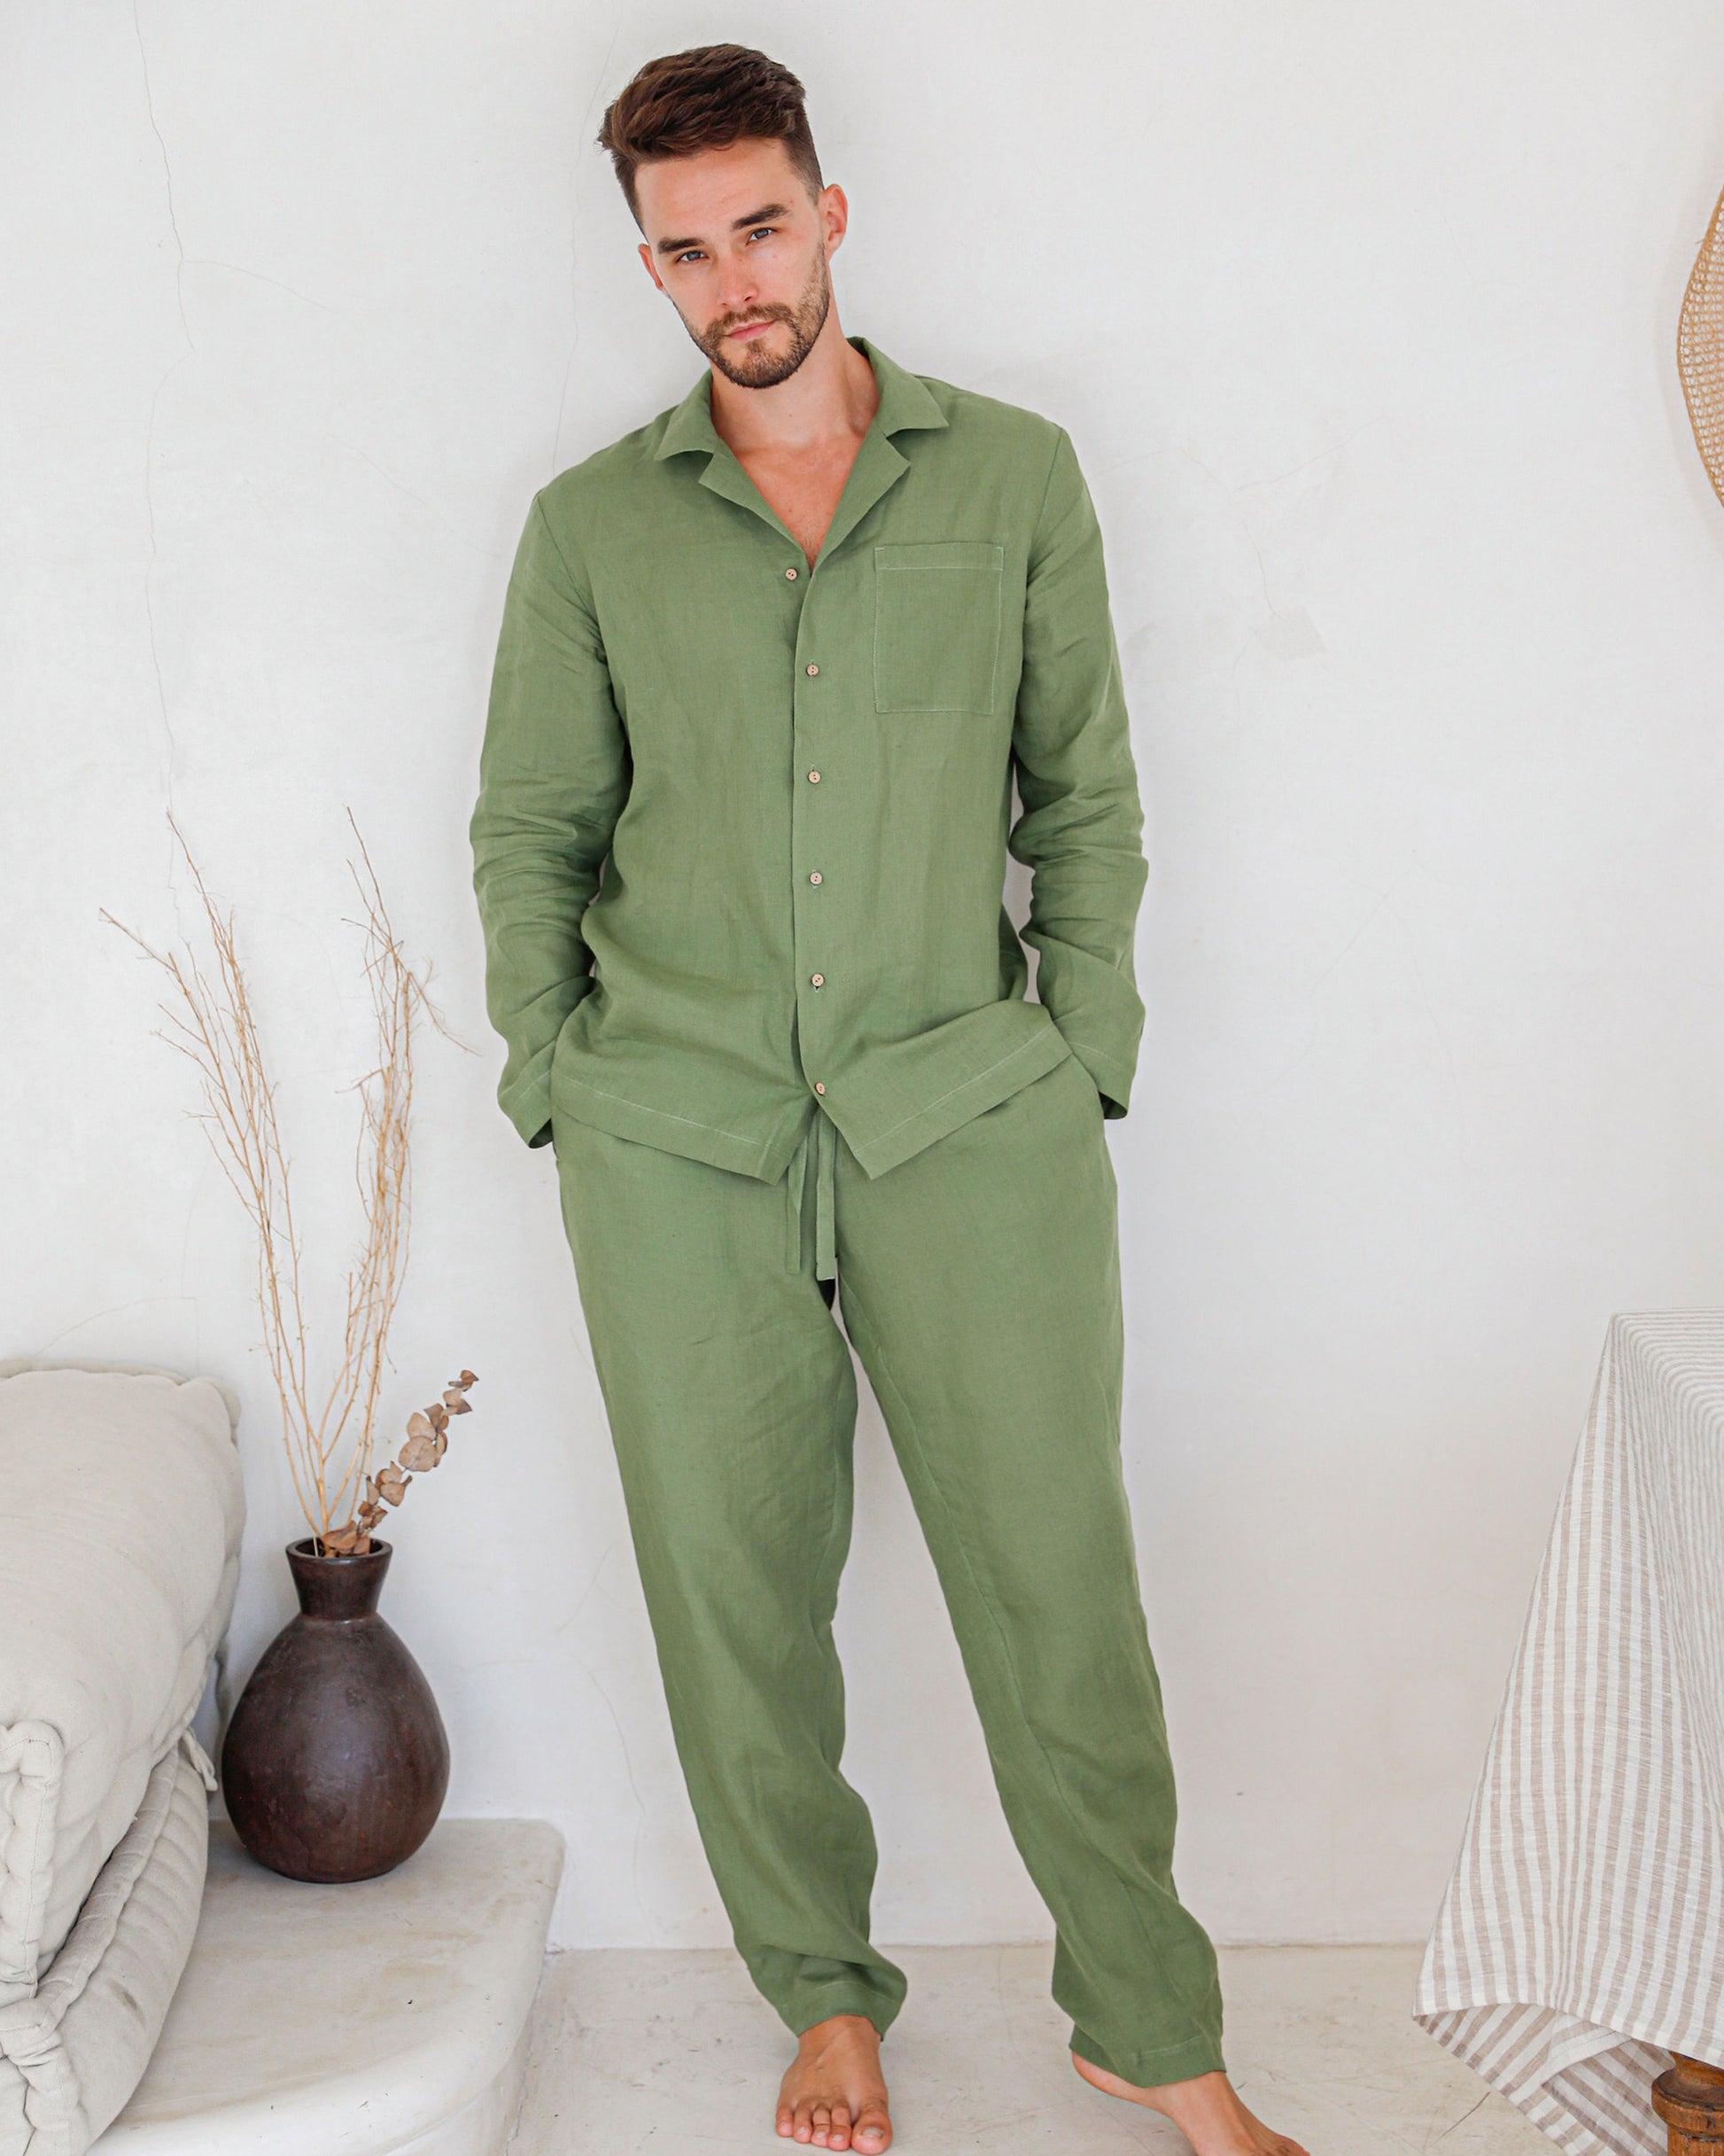 Men's linen pajama set VIGO in Forest green